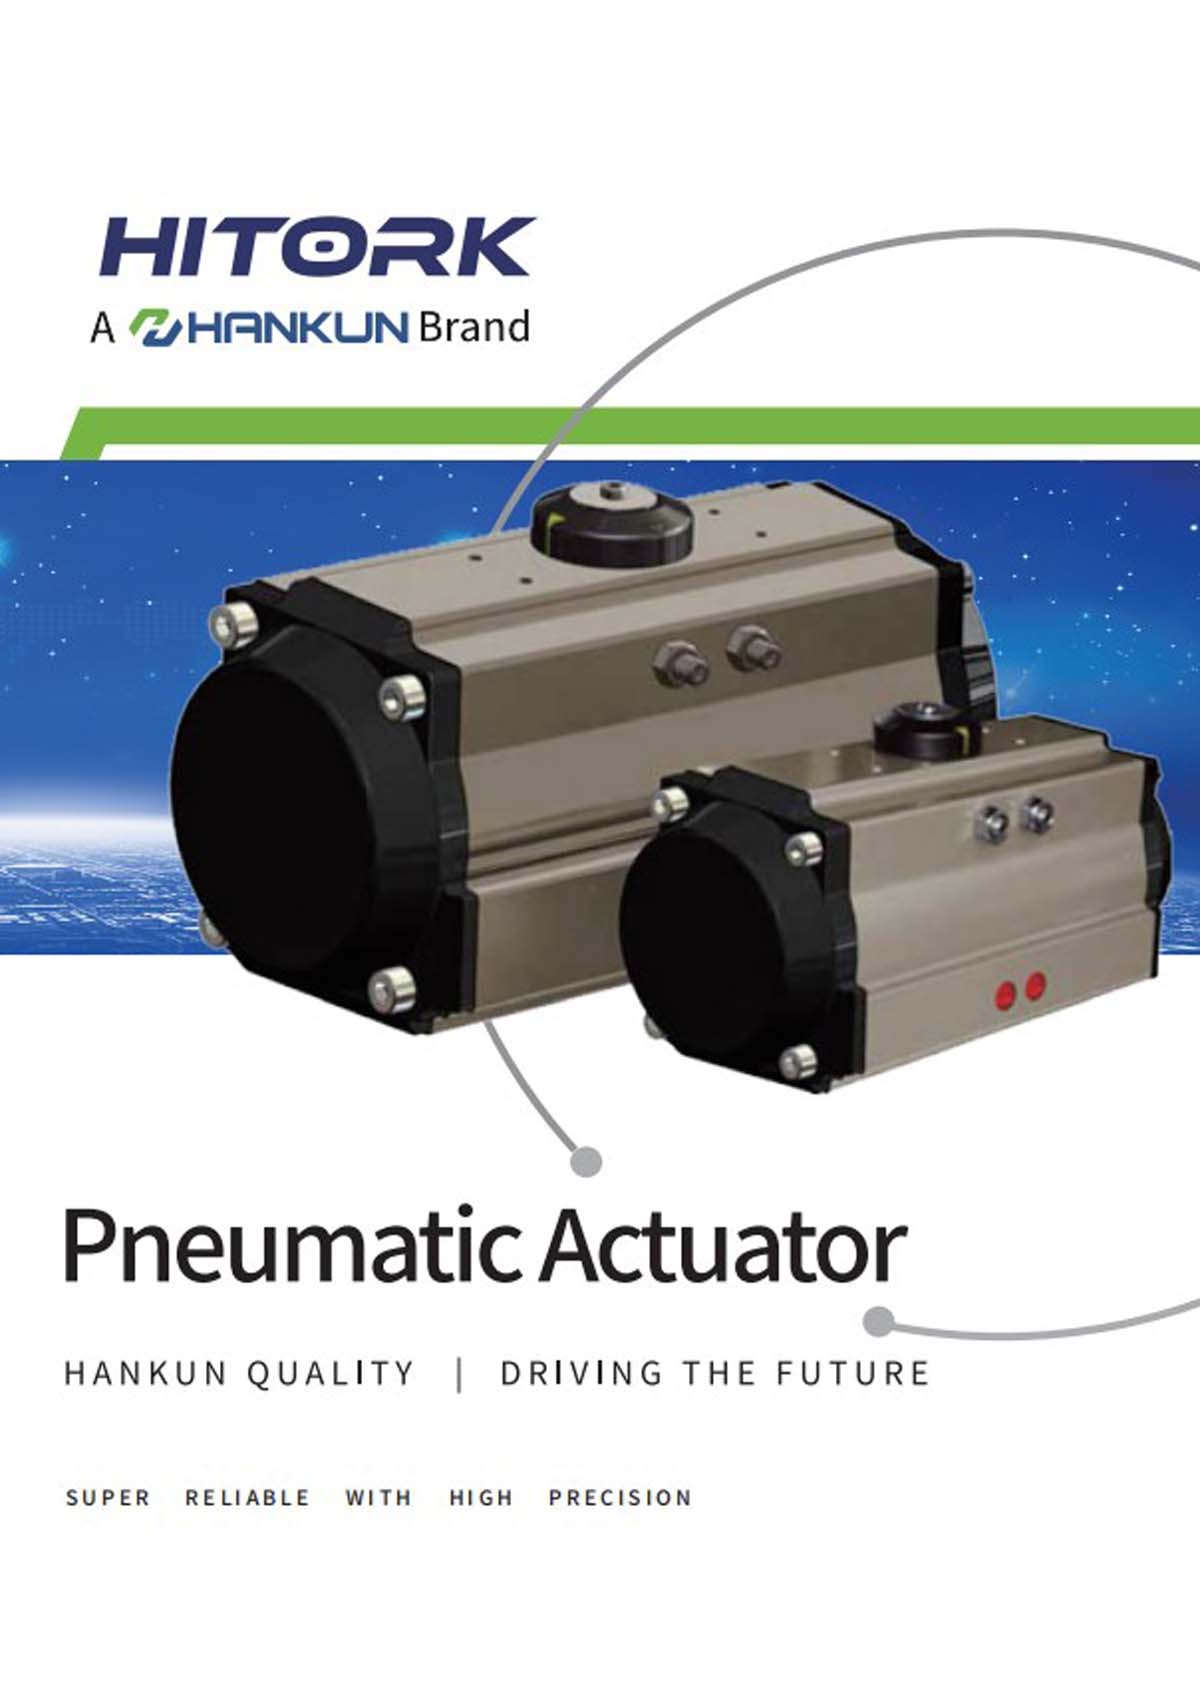 HITORK Pneumatic Actuator Version 3.1